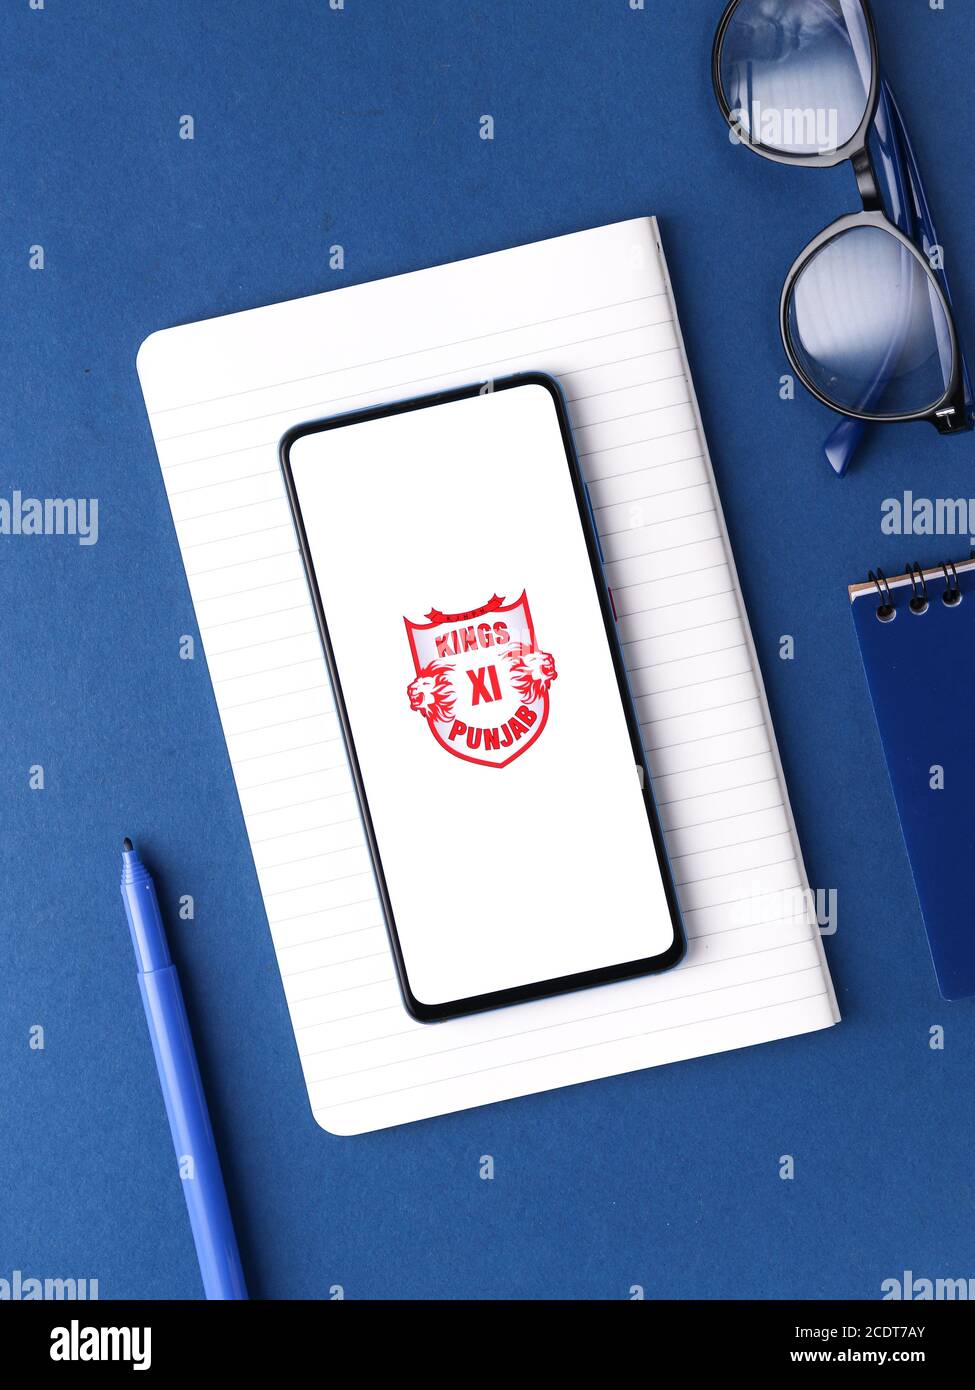 Assam, indien - August 27, 2020 : Kings XI punjab Logo auf Telefon Bildschirm Stock Bild. Stockfoto